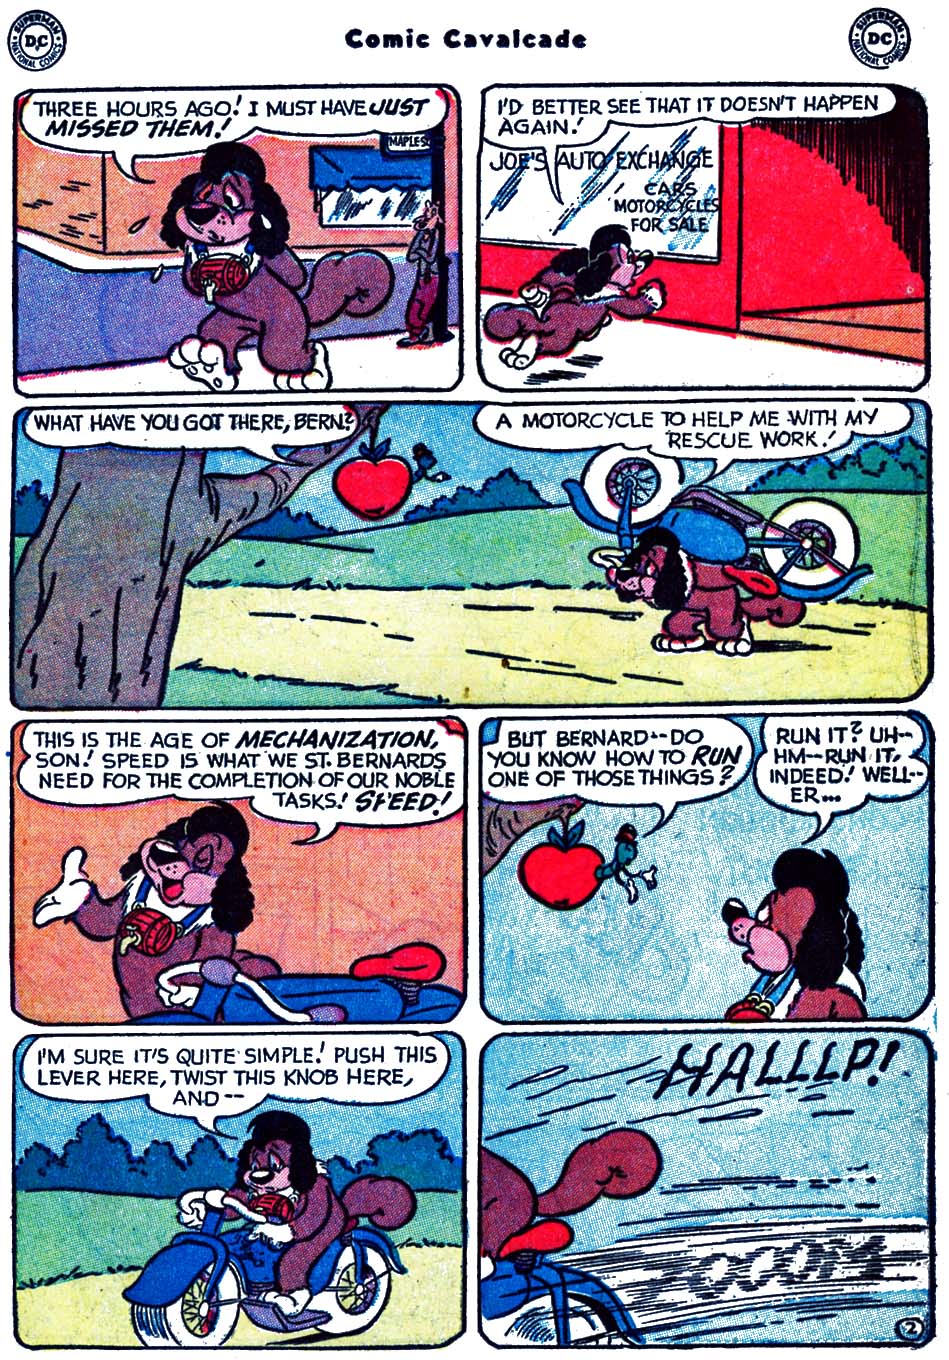 Comic Cavalcade issue 55 - Page 23